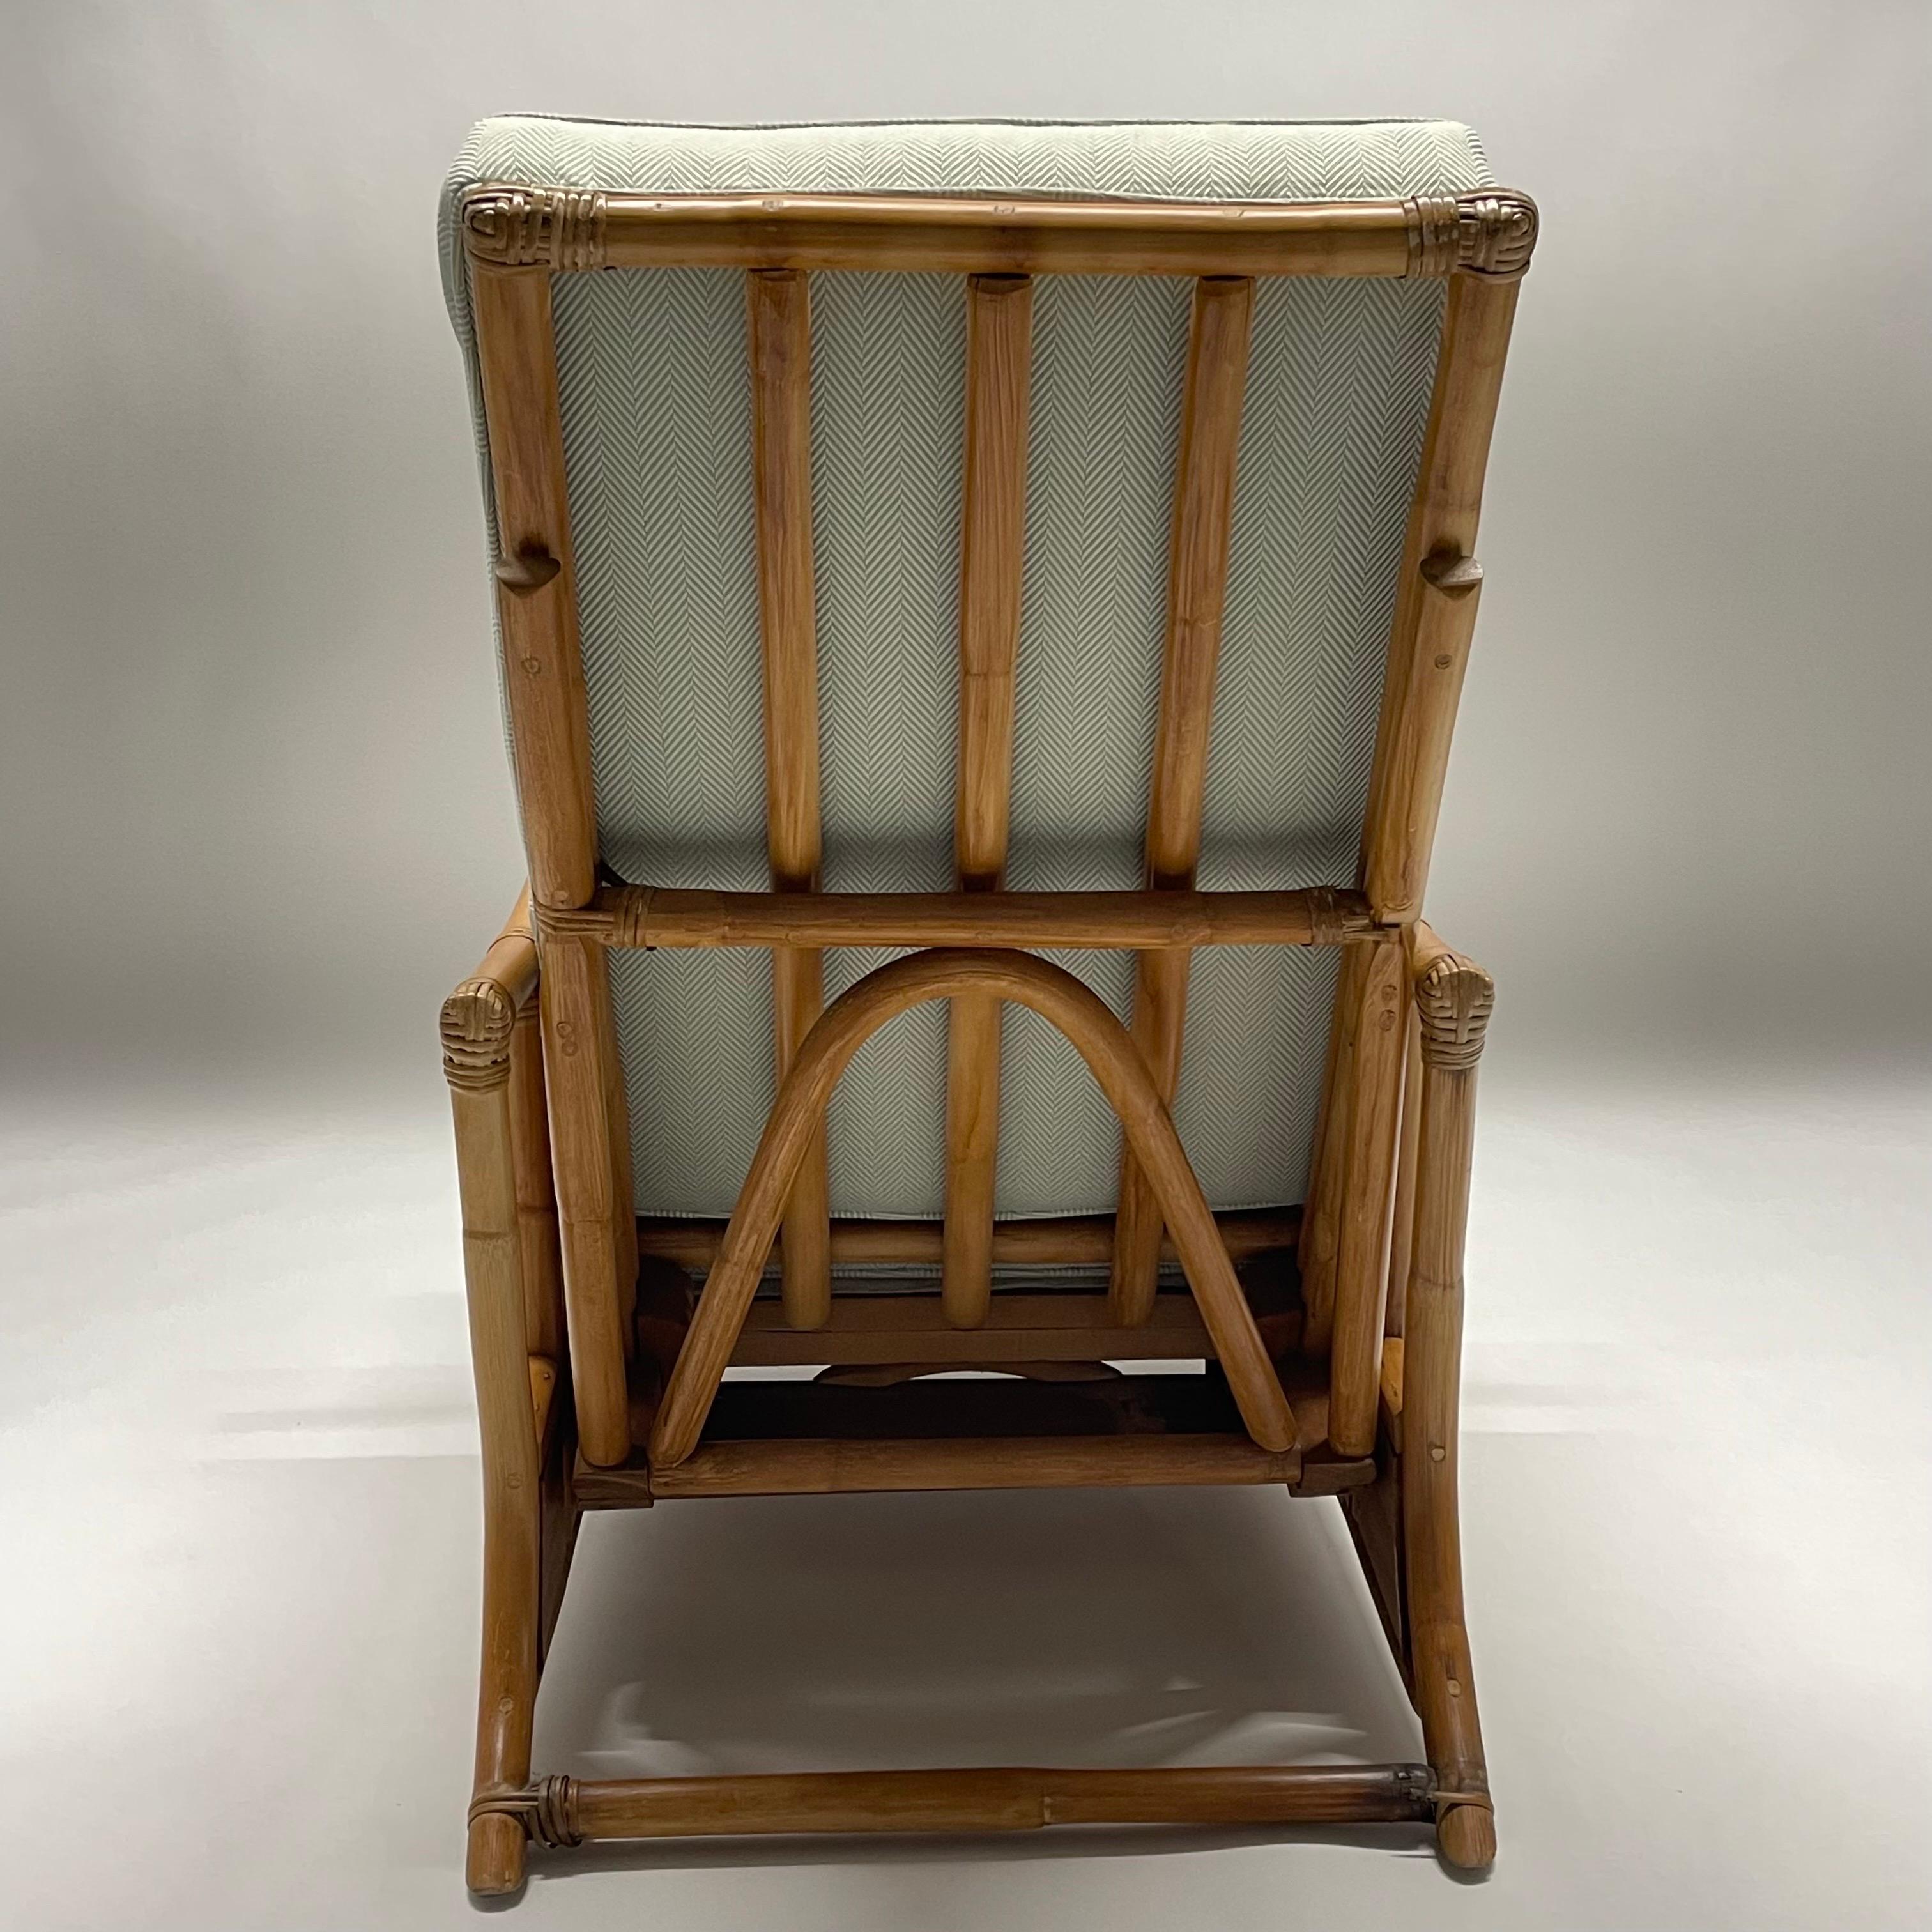 20th Century Italian Mid-Century Rattan Wicker Bamboo Recliner Lounge Chair, Italy, 1950s